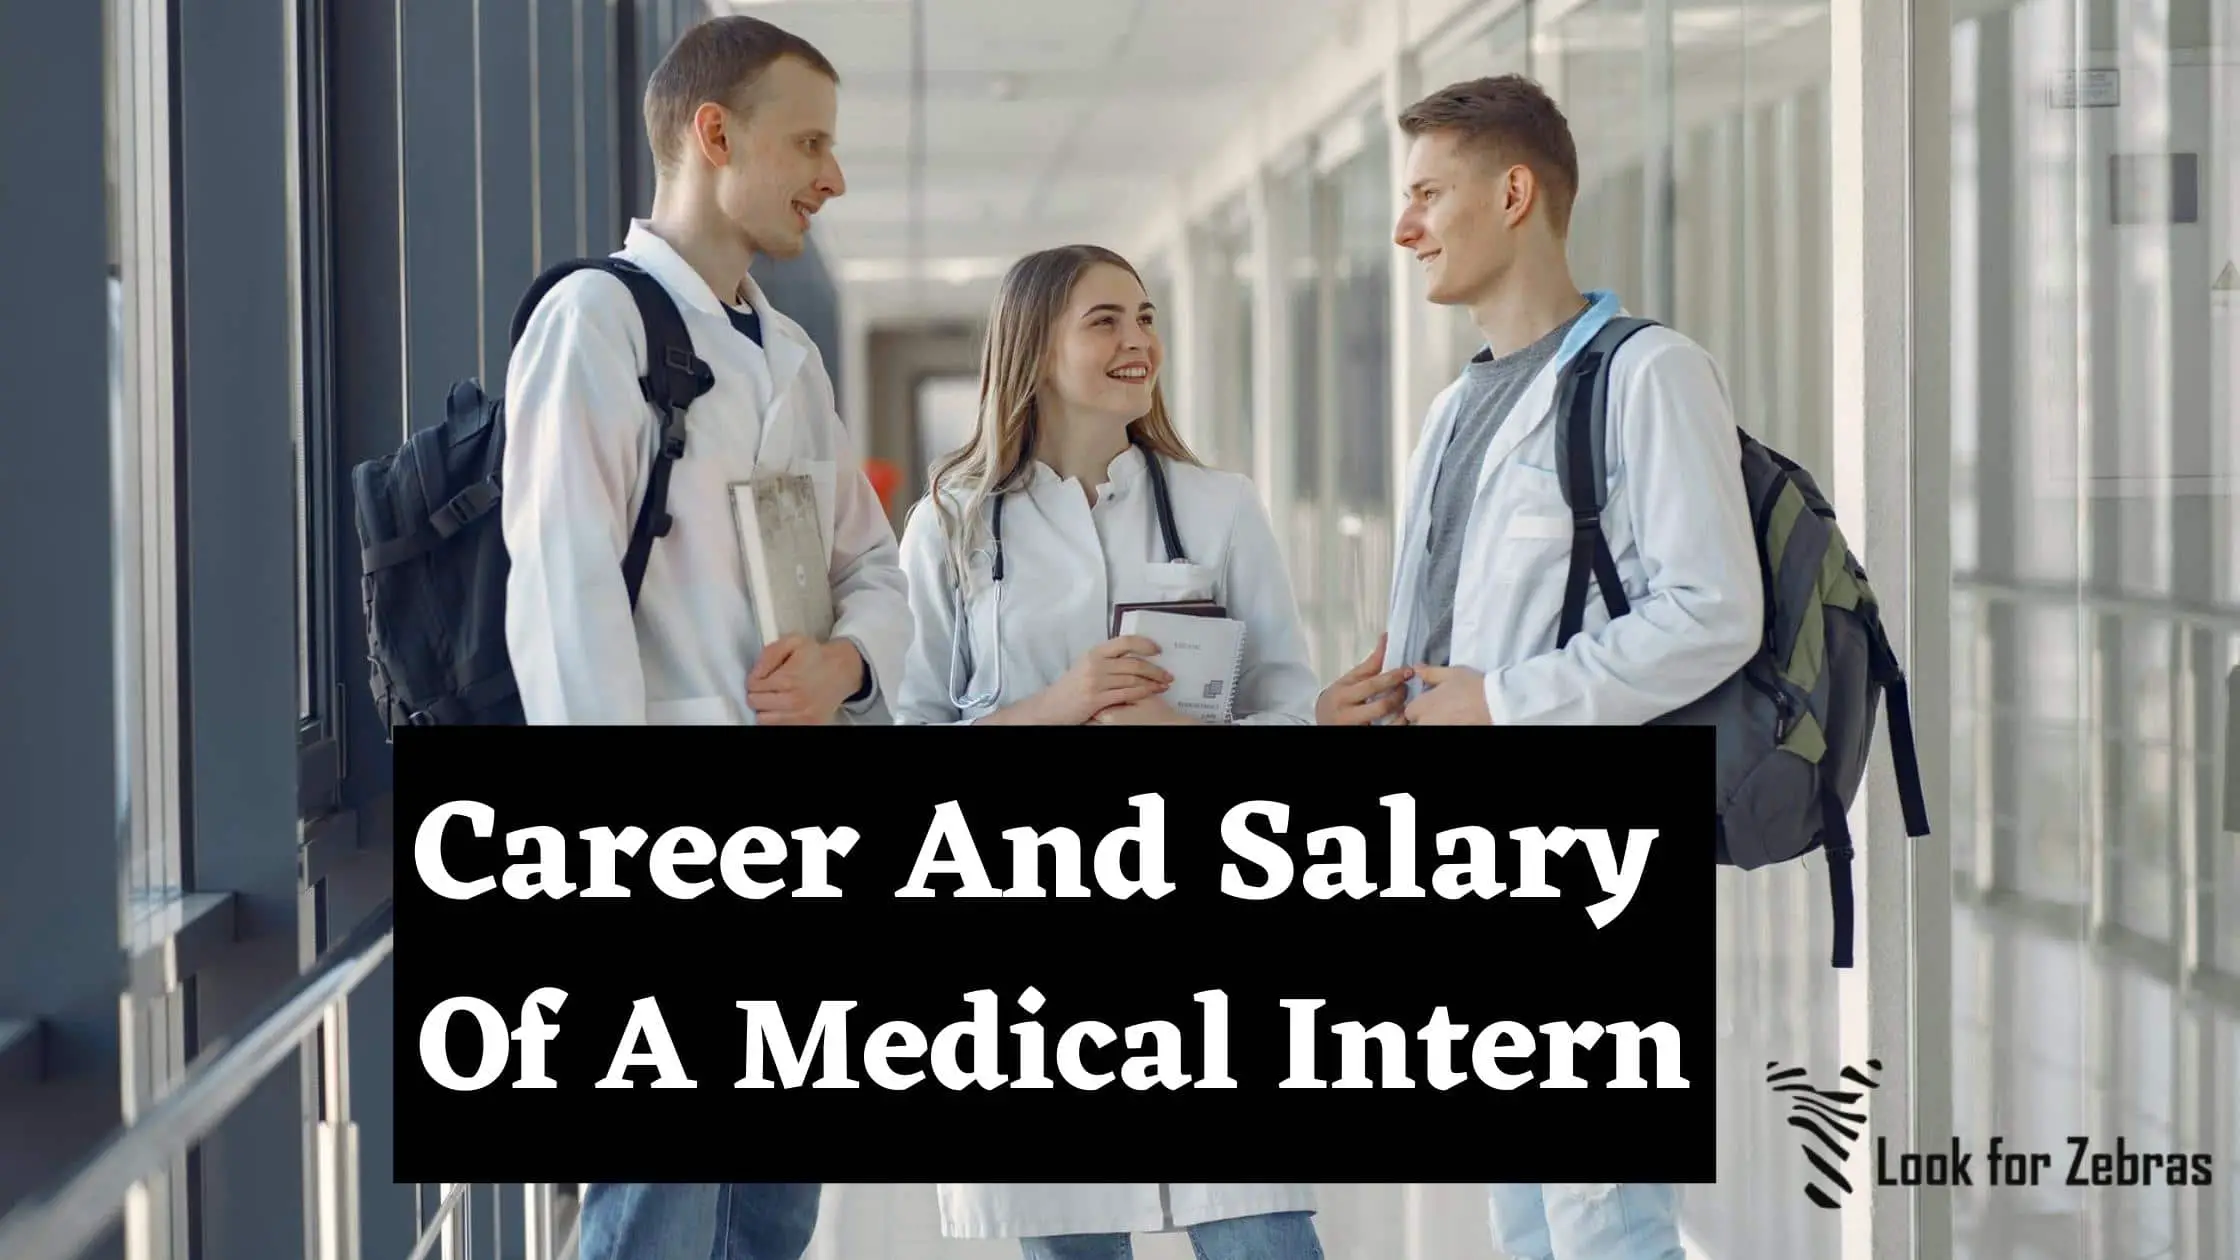 Career advice for Medical intern